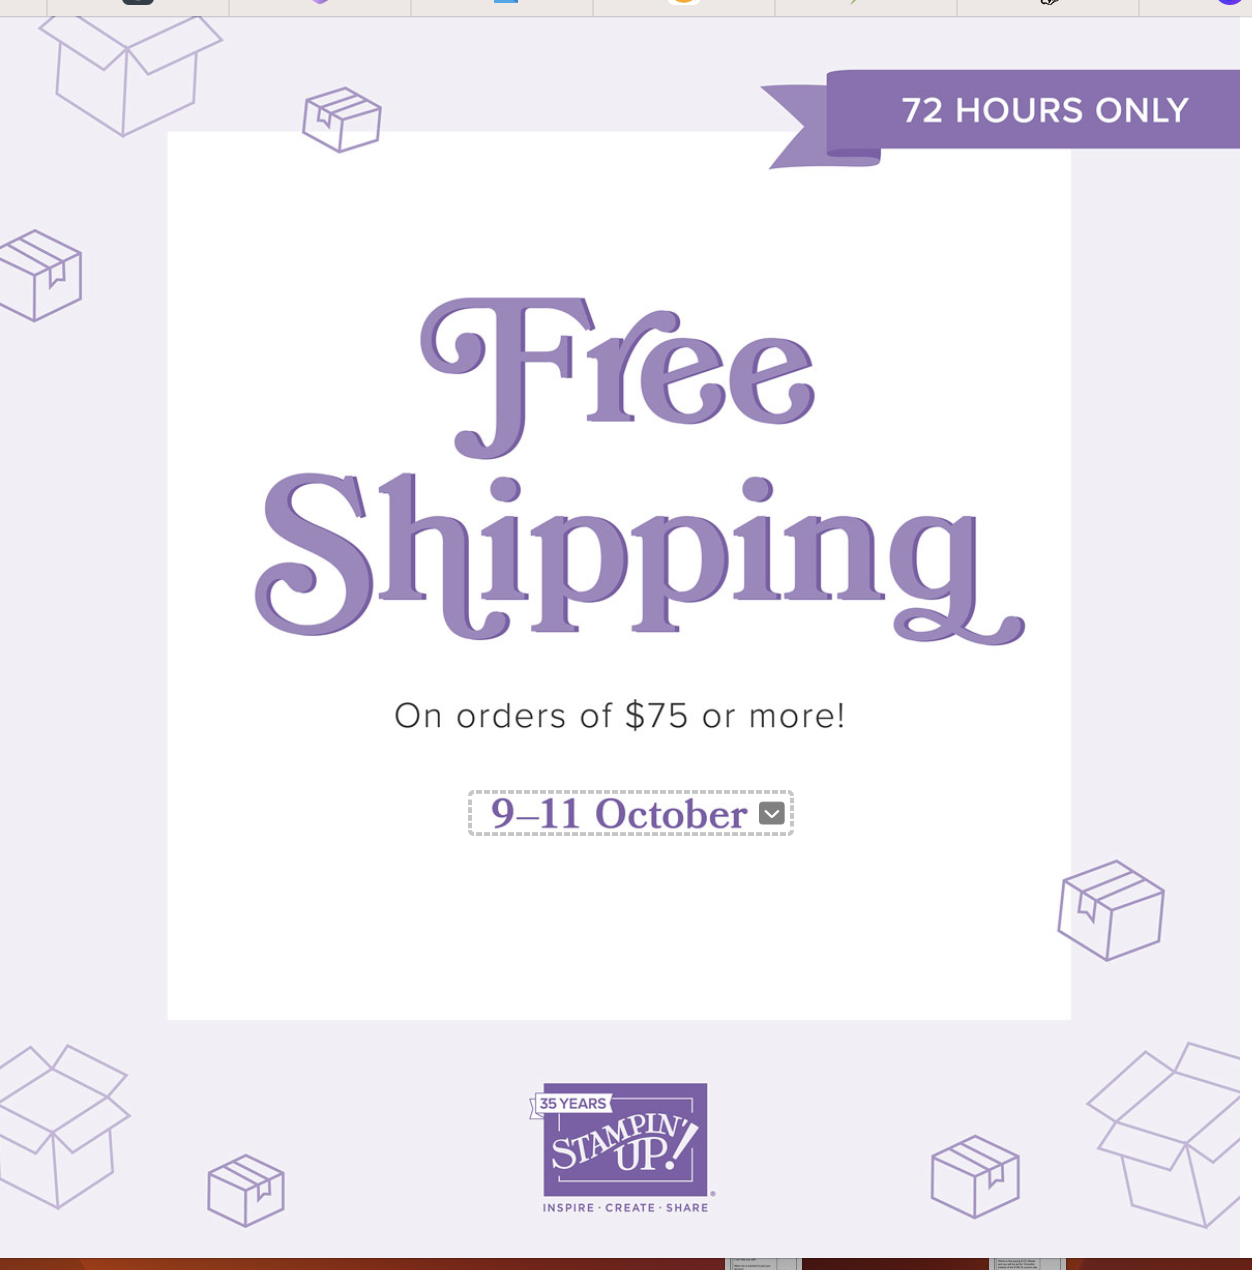 Free Shipping October 9-11